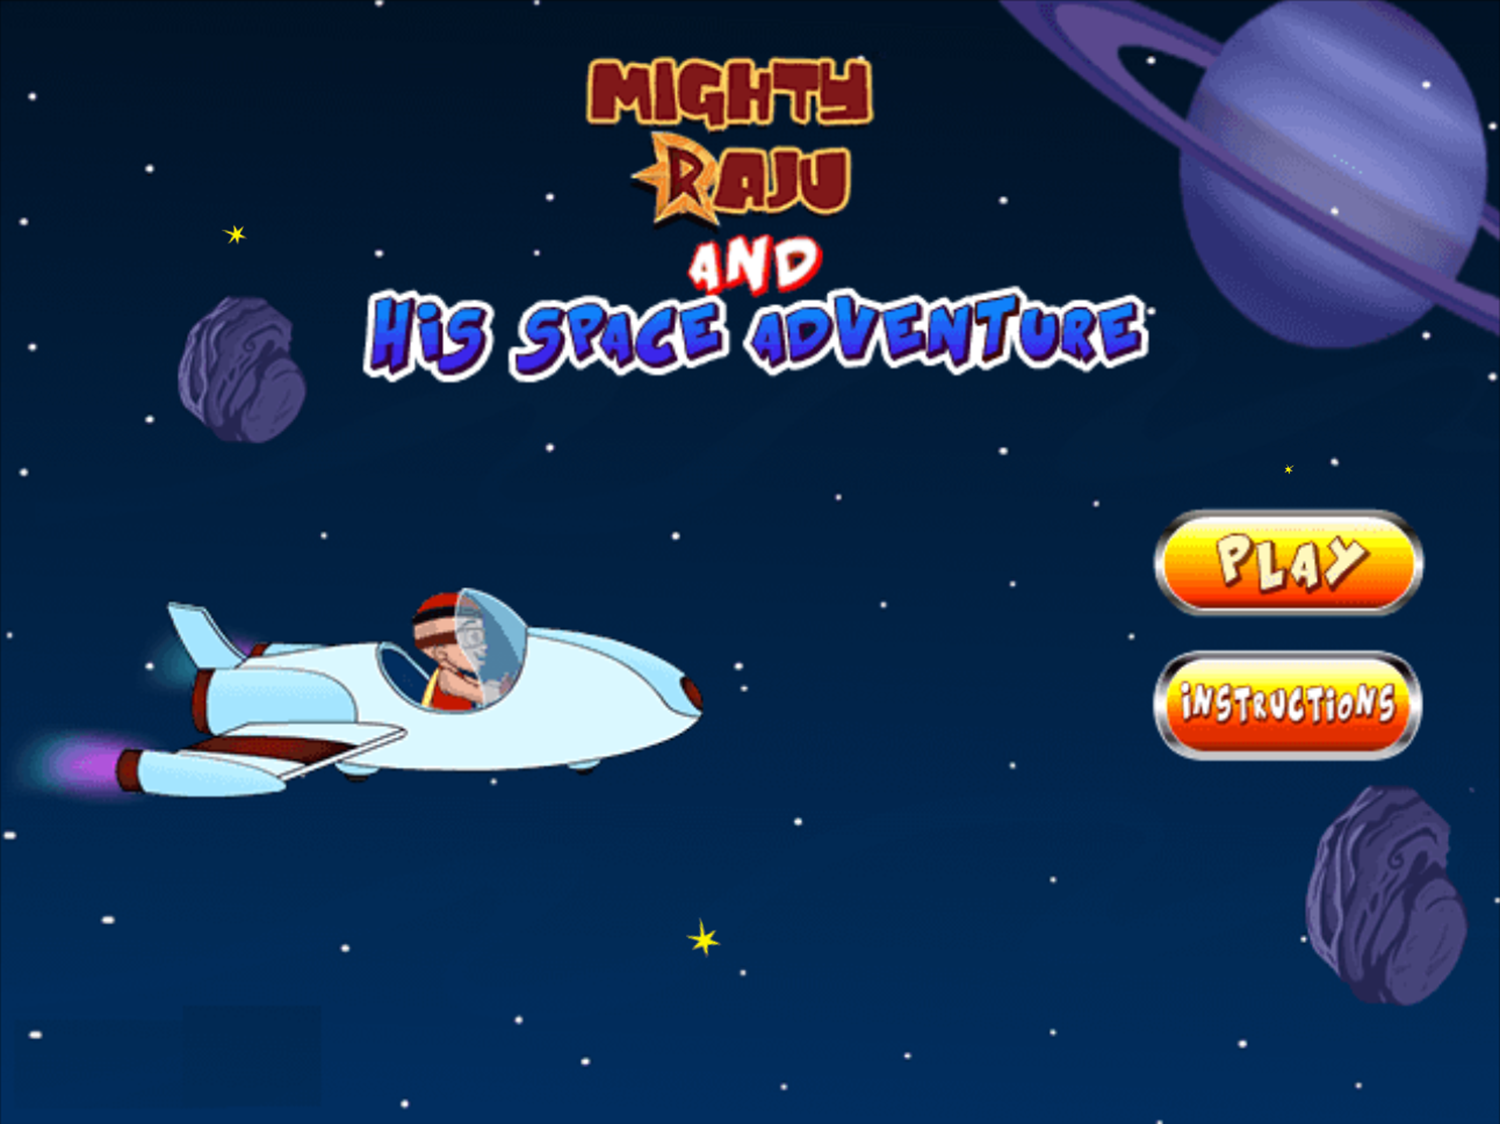 Mighty Raju and His Space Adventure Game Welcome Screen Screenshot.